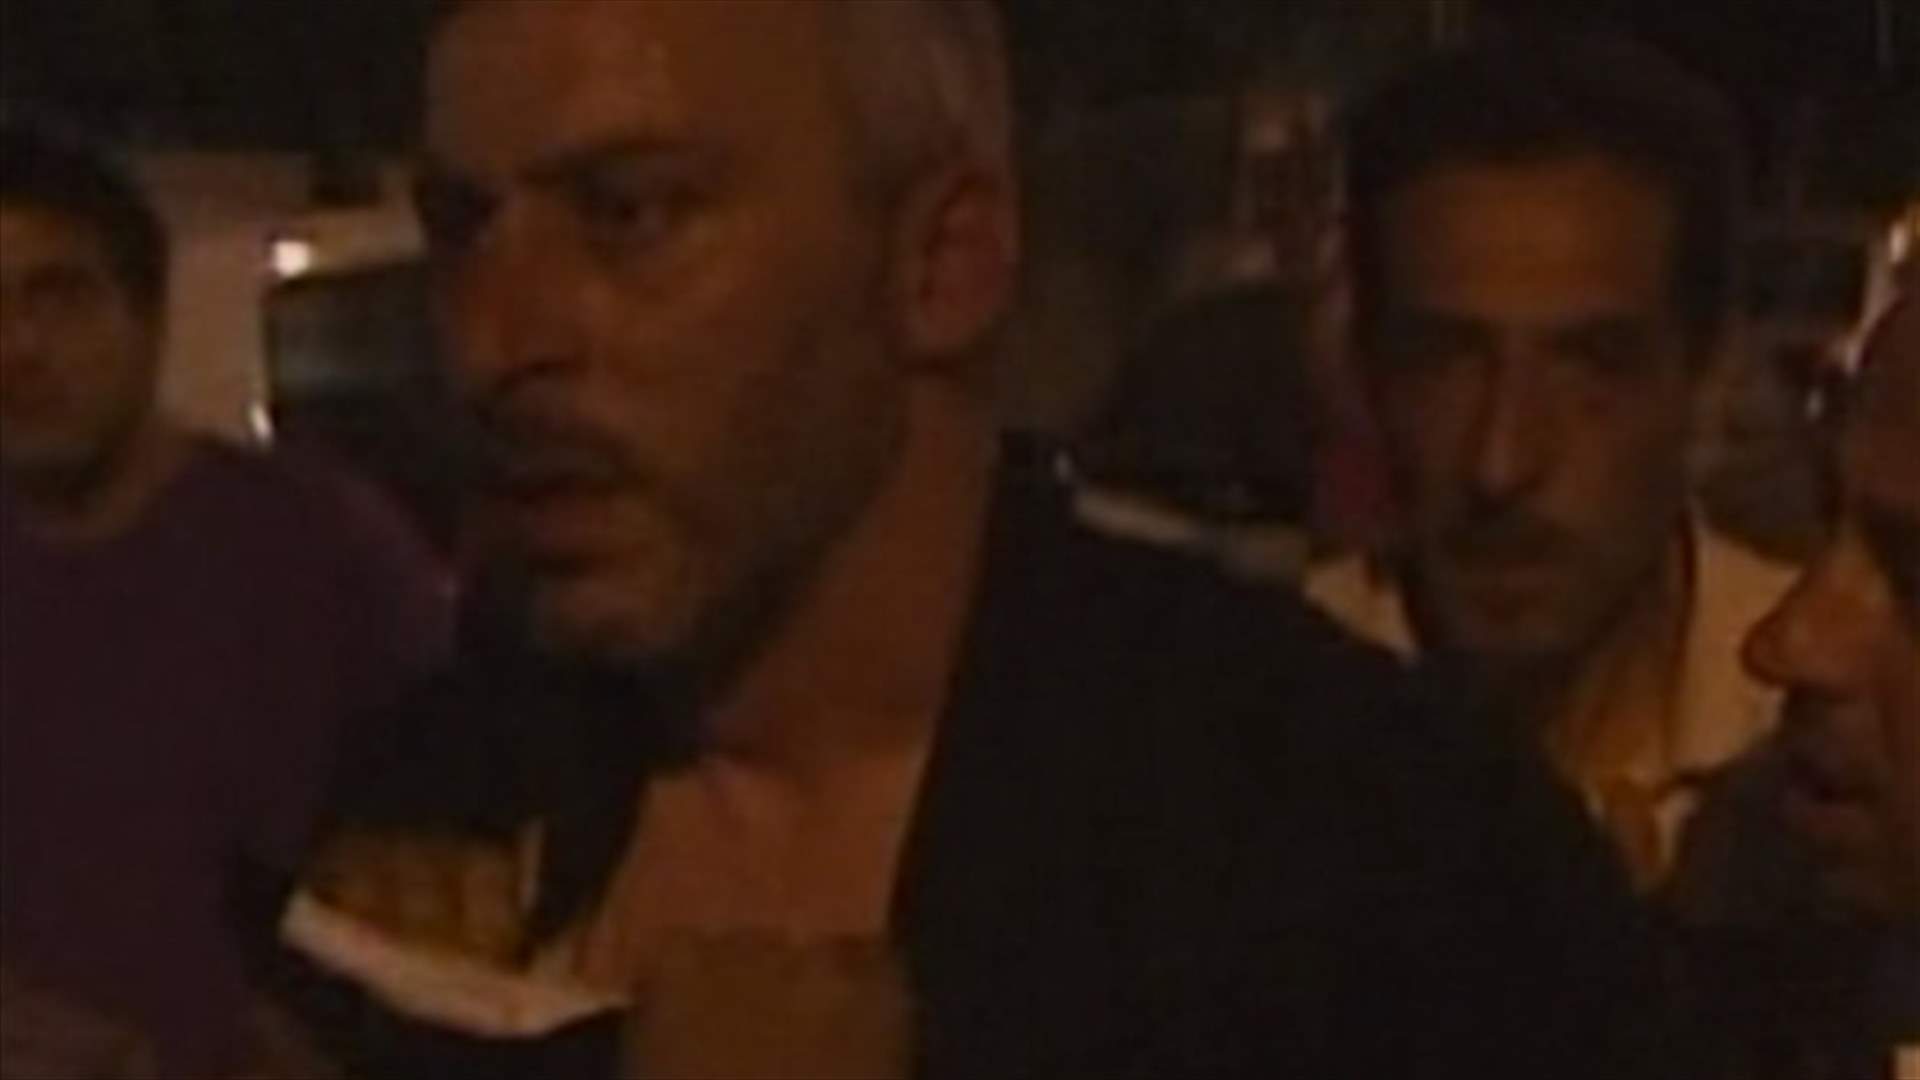 Firing at Al Jadeed TV, one of the perpetrators arrested 